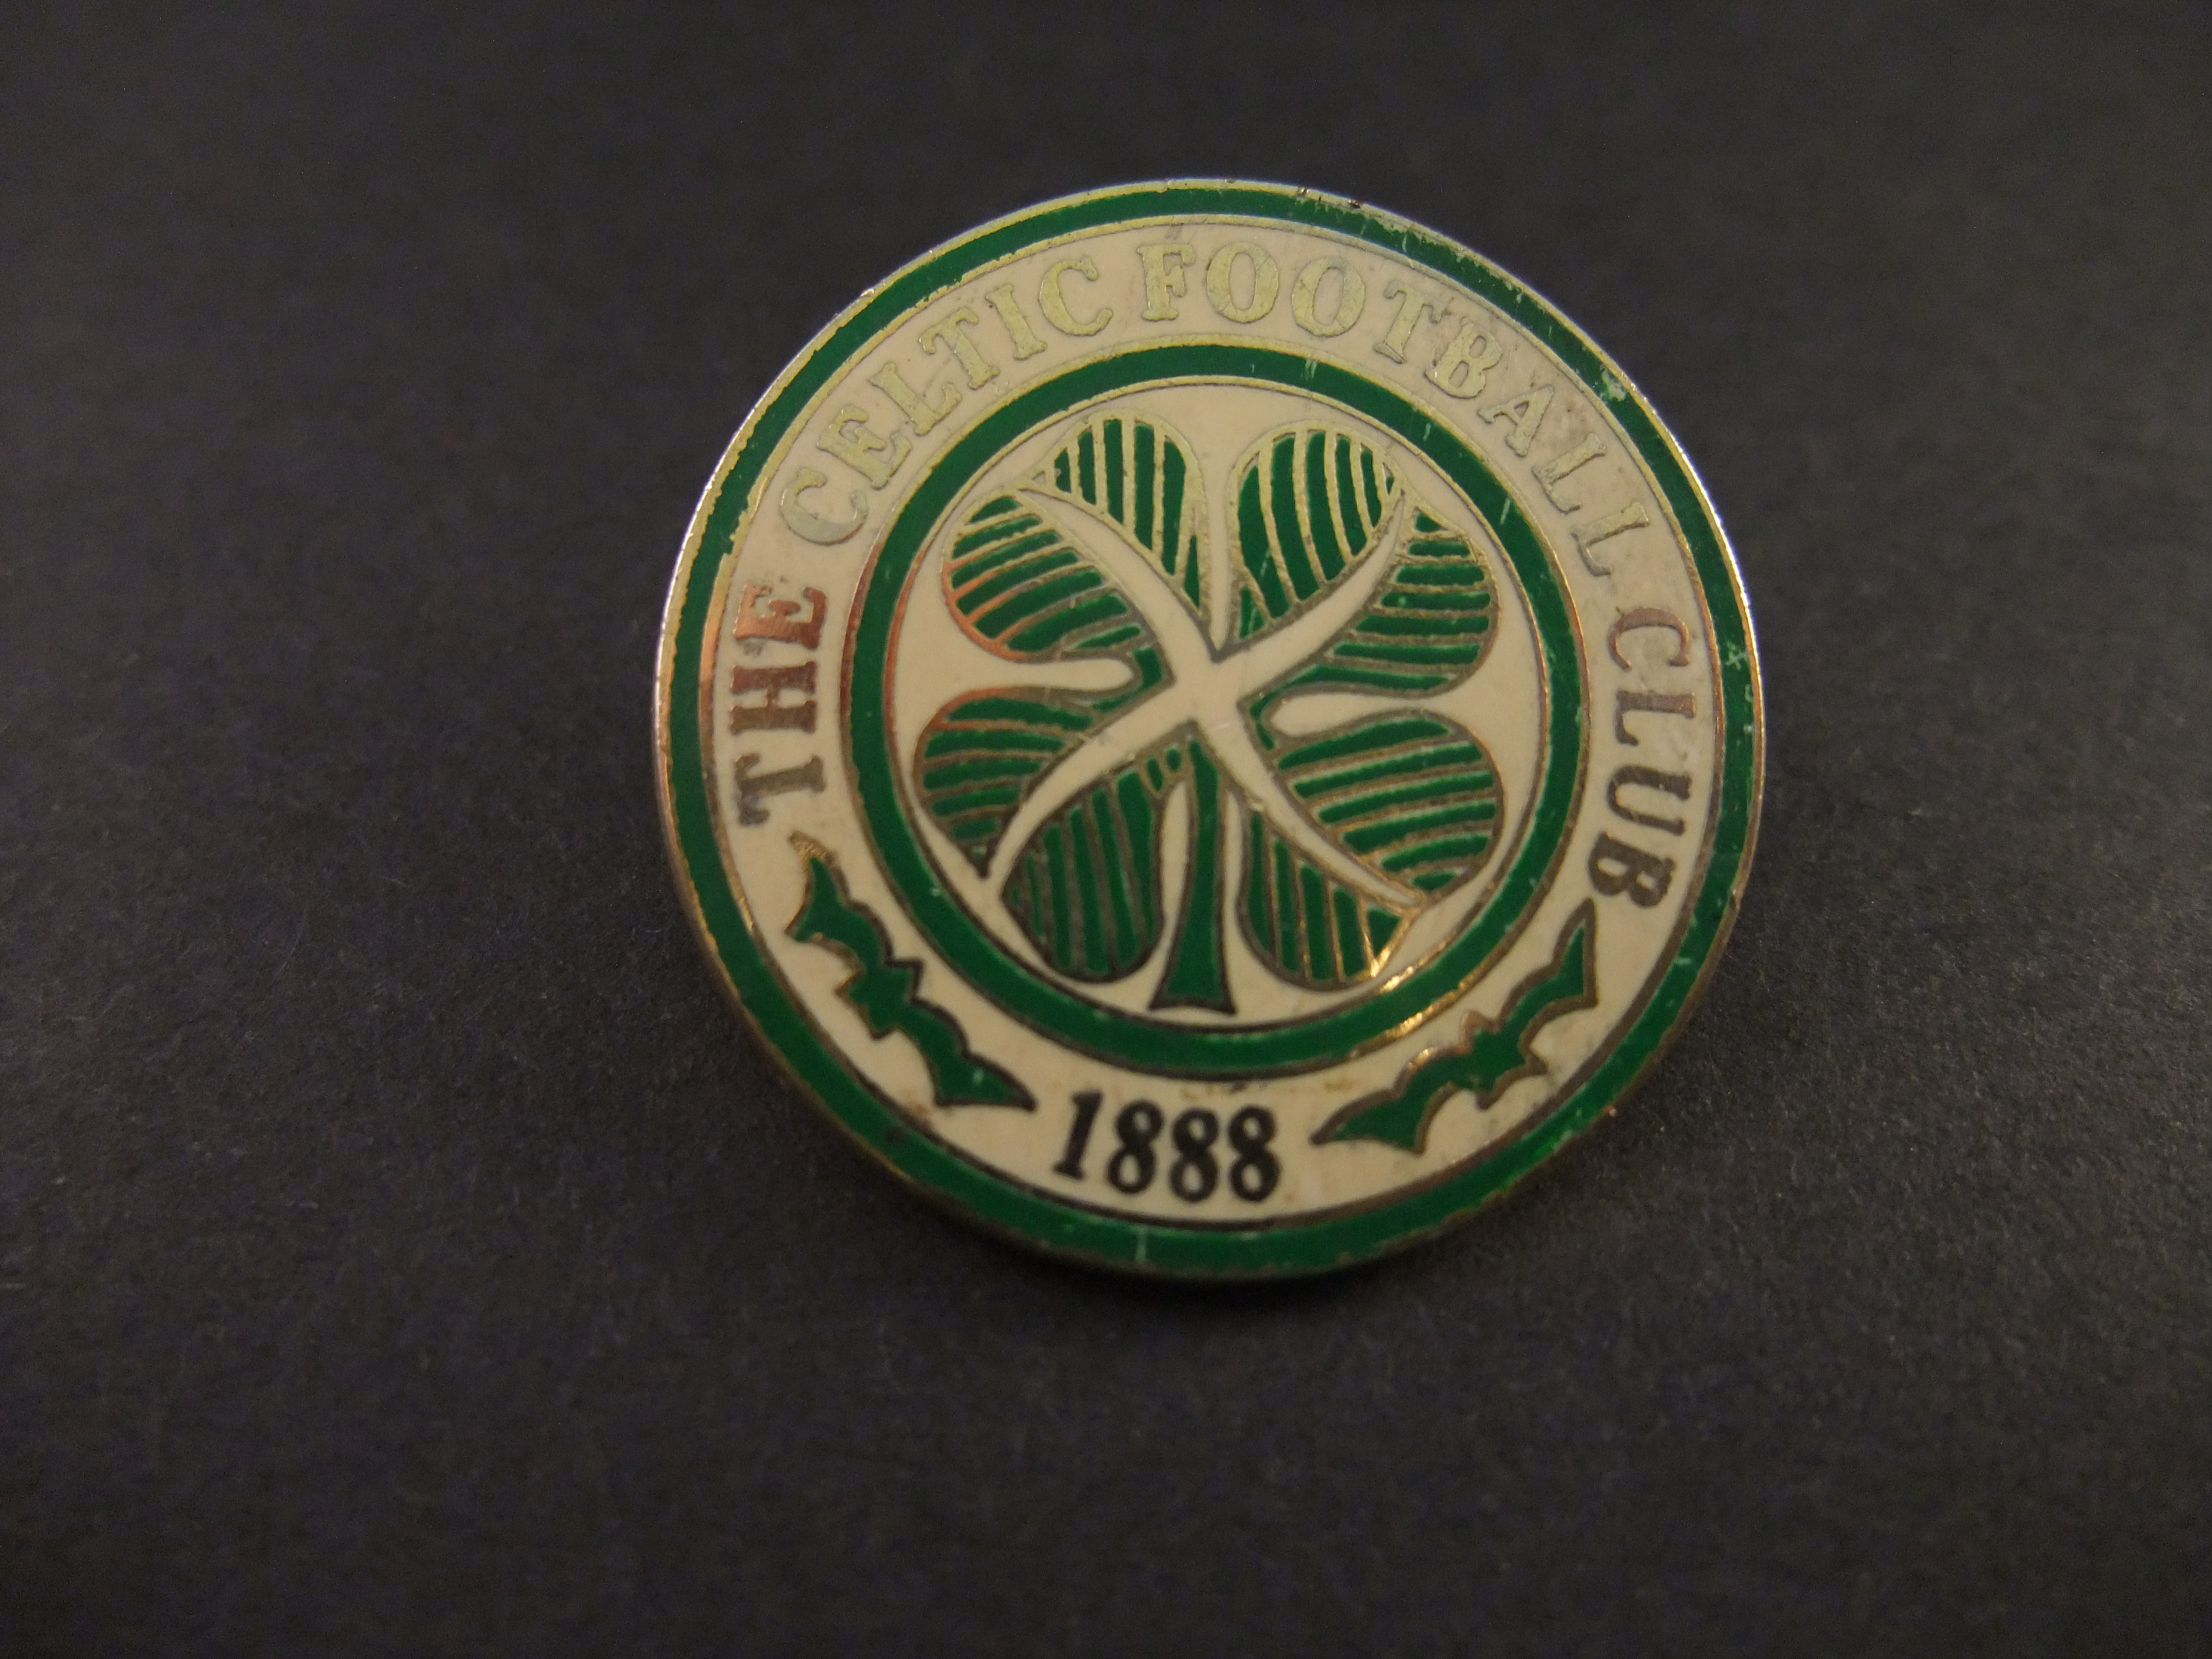 The Celtic Football Club 1888 ( voetbalclub uit Glasgow in Schotland )logo